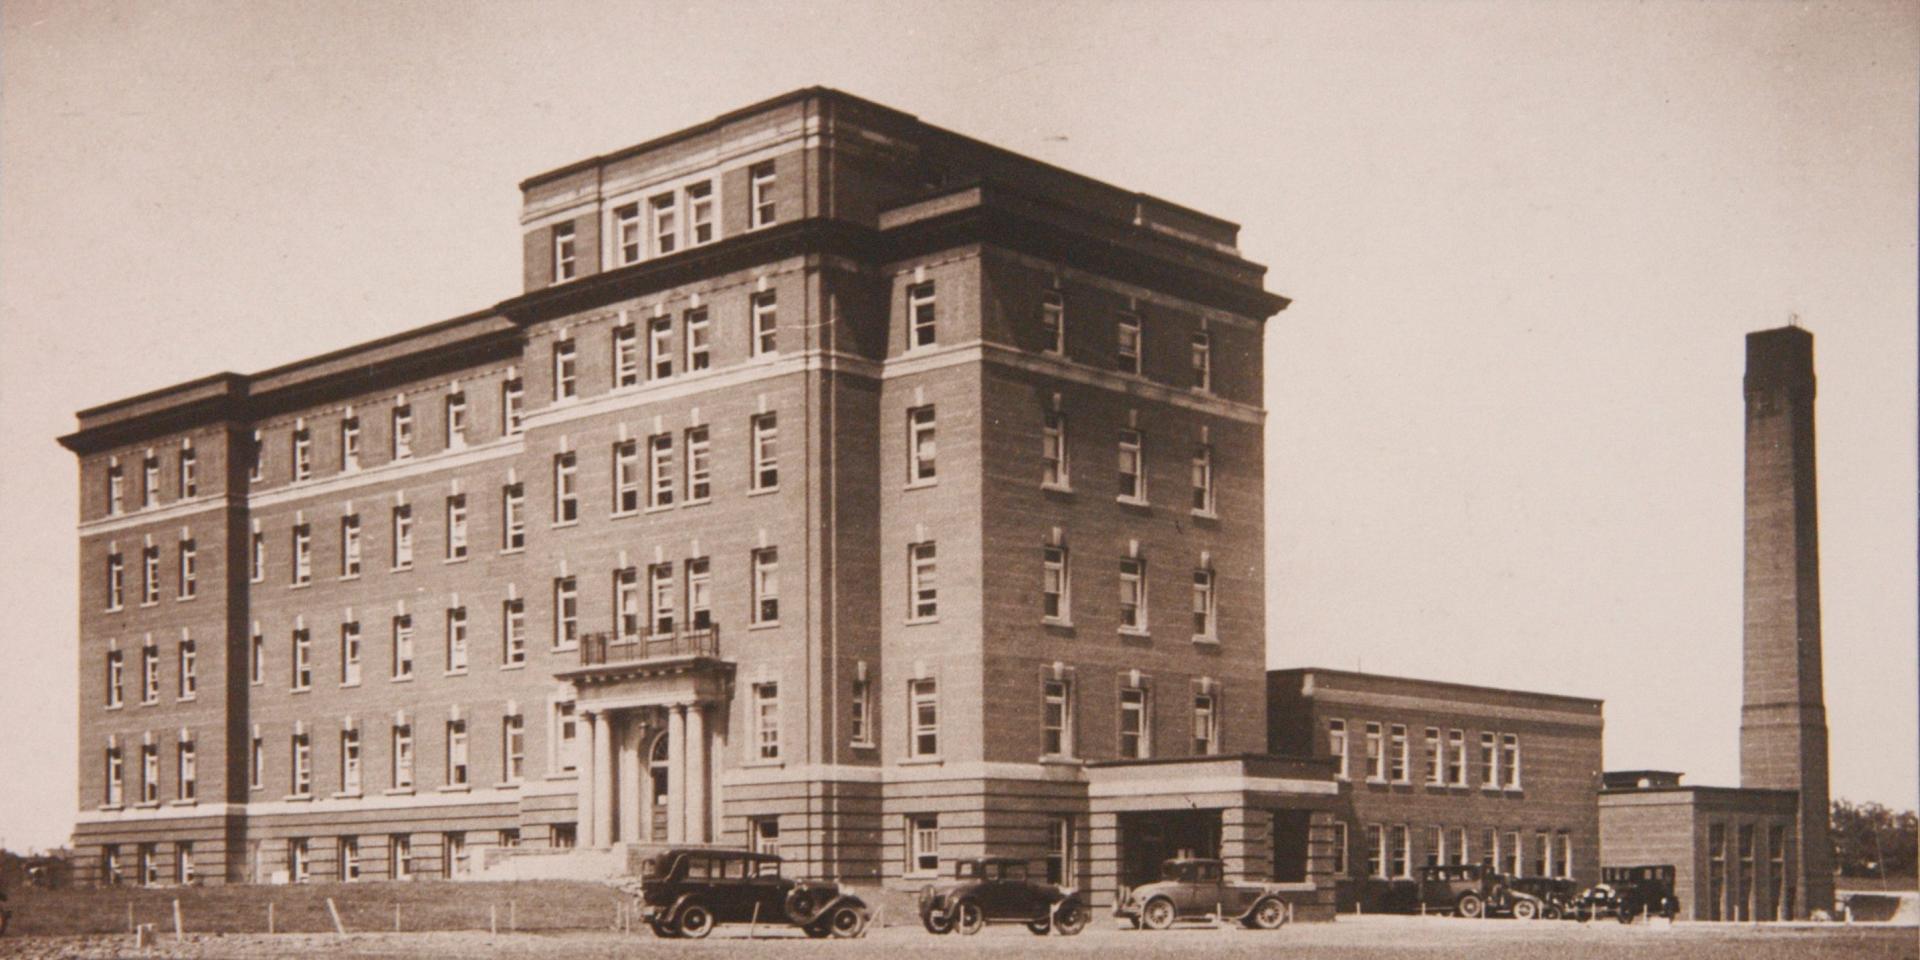 Toronto East General Hospital (now known as Michael Garron Hospital)